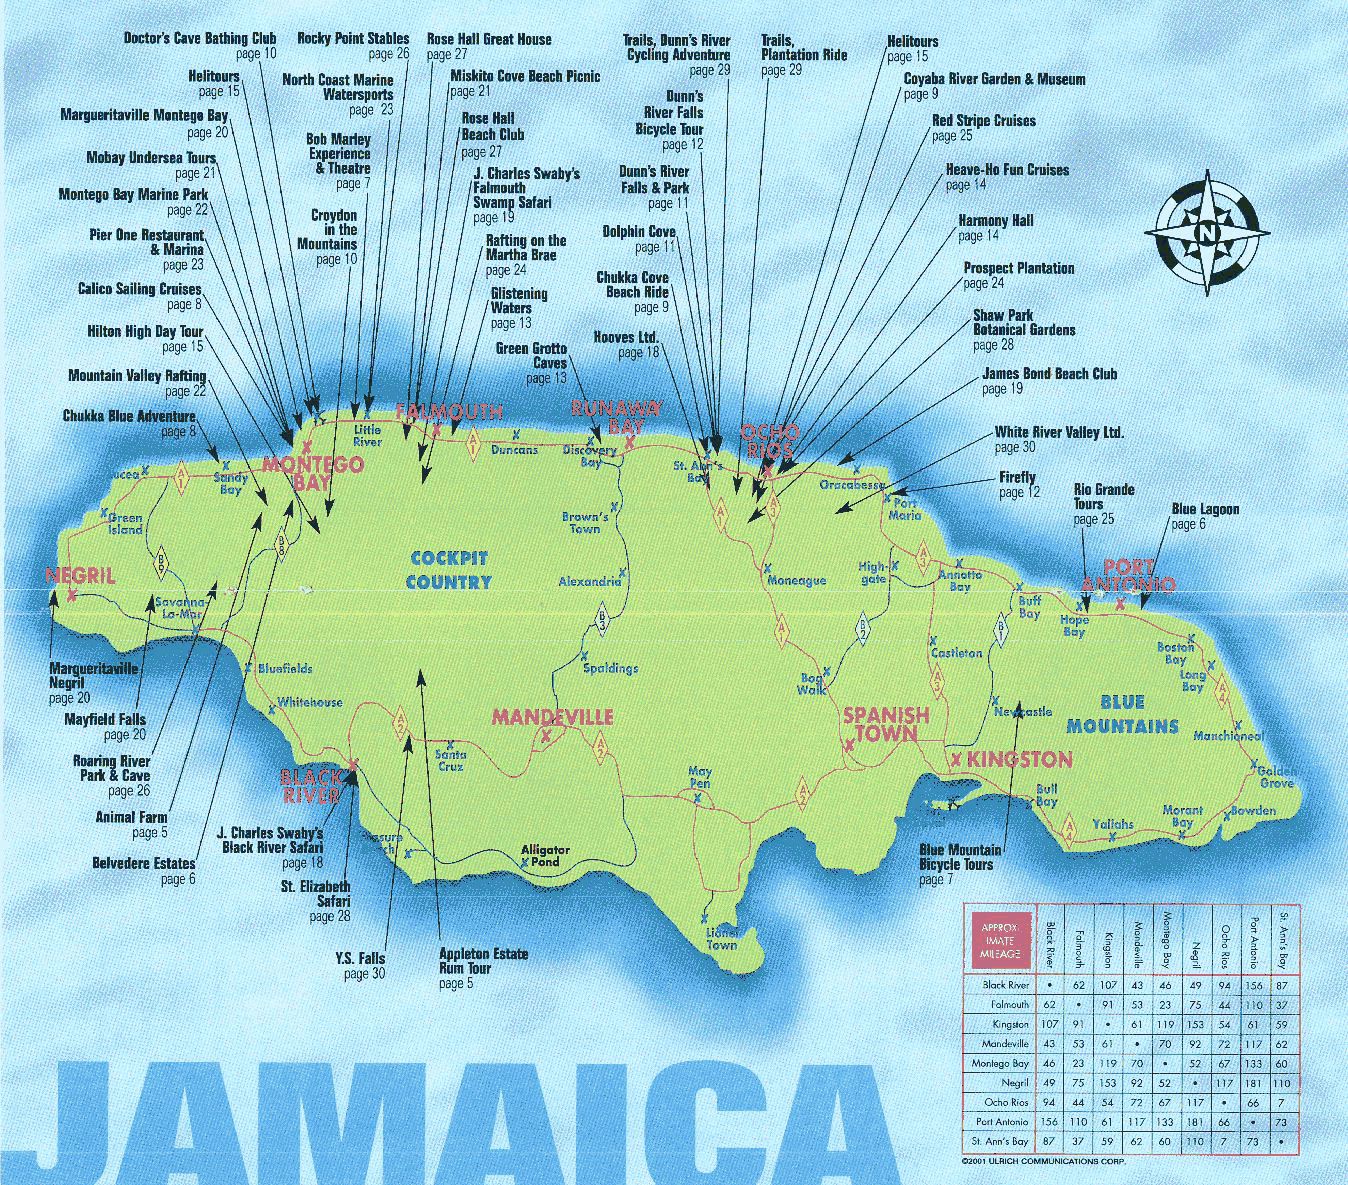 Rasta Johns Westendnegril Negril Jamaica Caribbean Tour Attraction